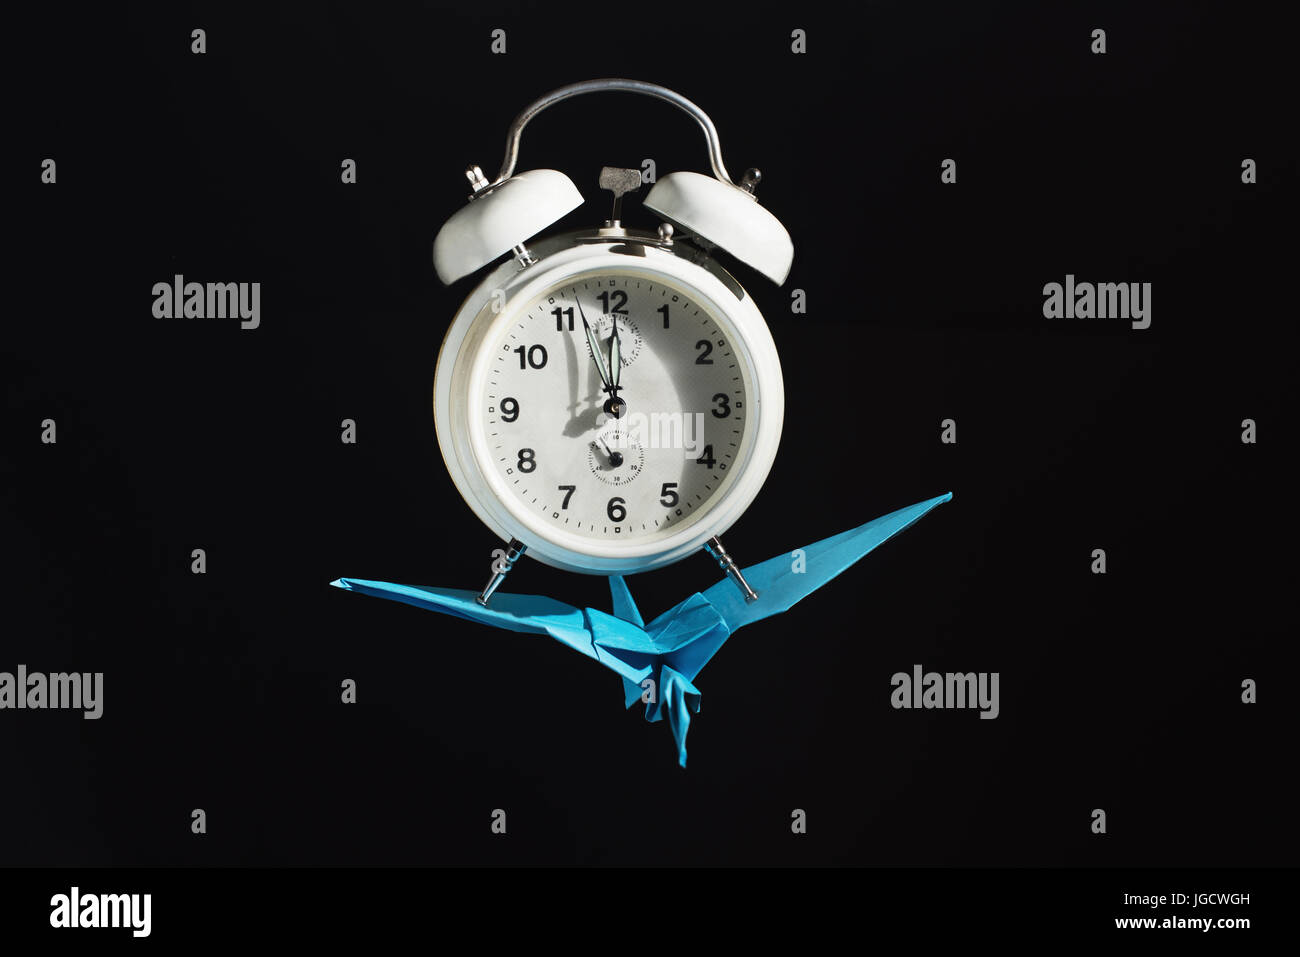 Origami bird flying with an alarm clock Stock Photo